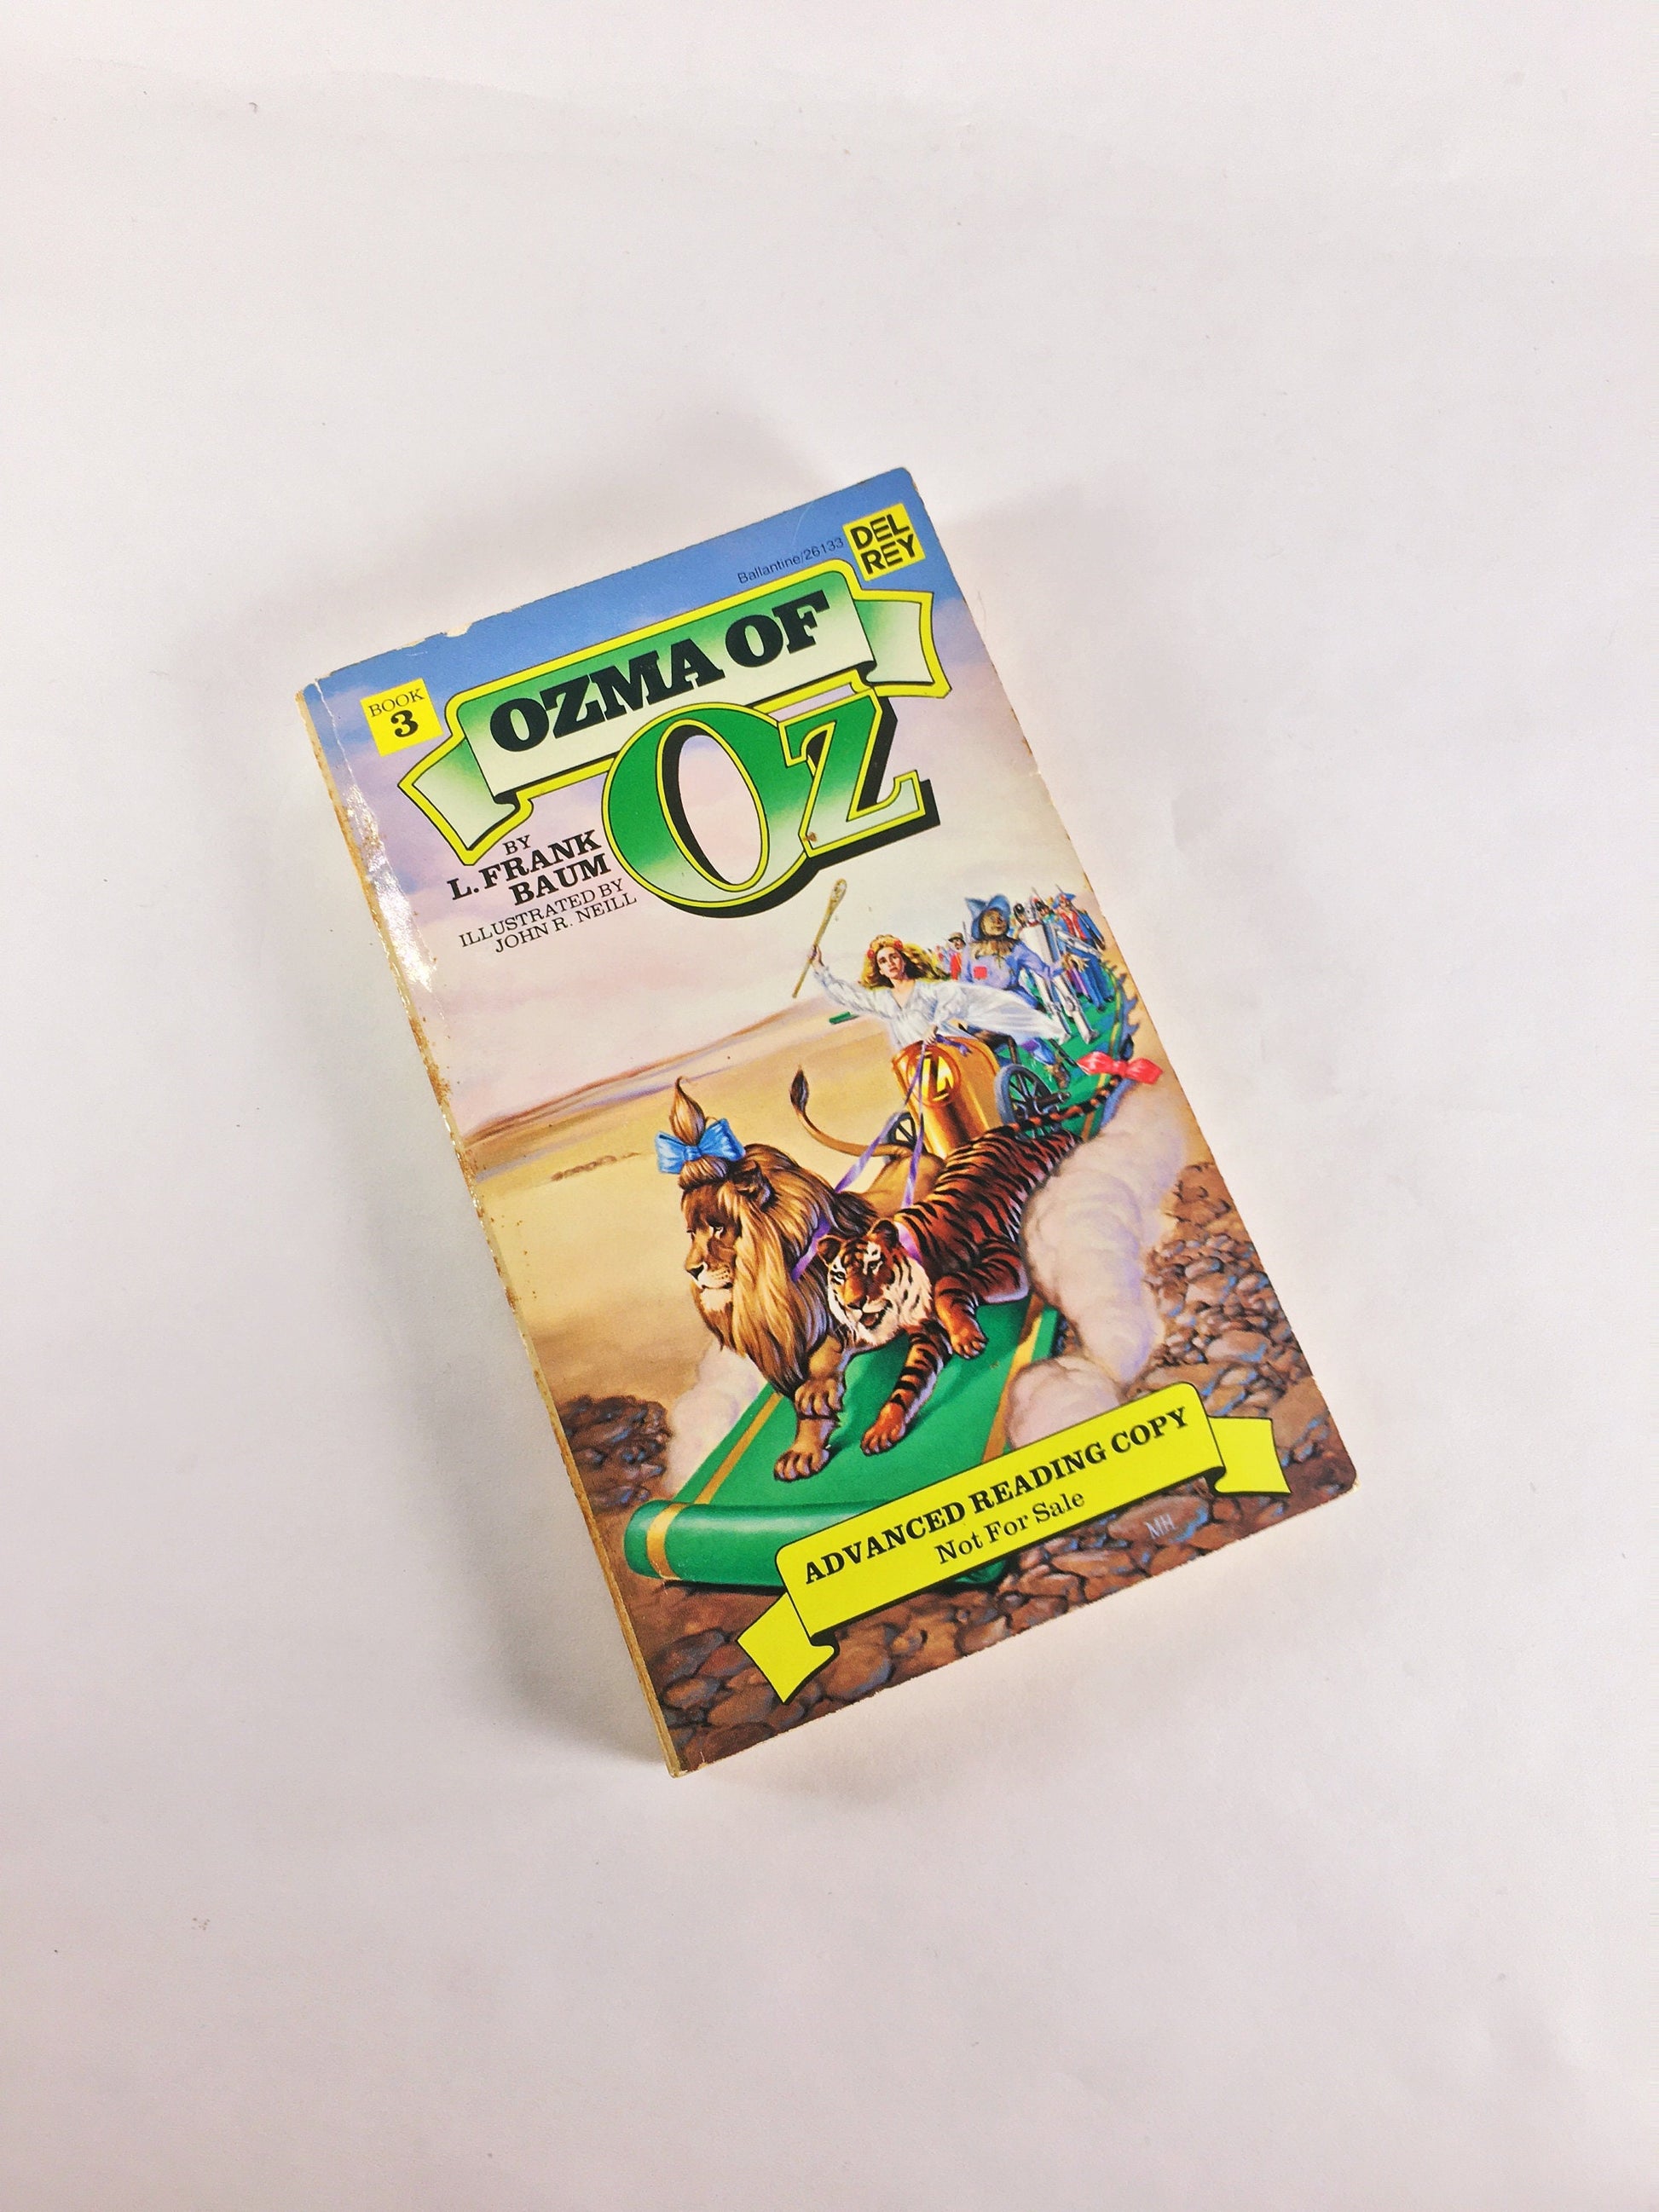 1979 Wizard of Oz vintage paperback book by L Frank Baum Tik-Tok Ozma and Wizard of Oz circa 1979. Teen tween home school reading